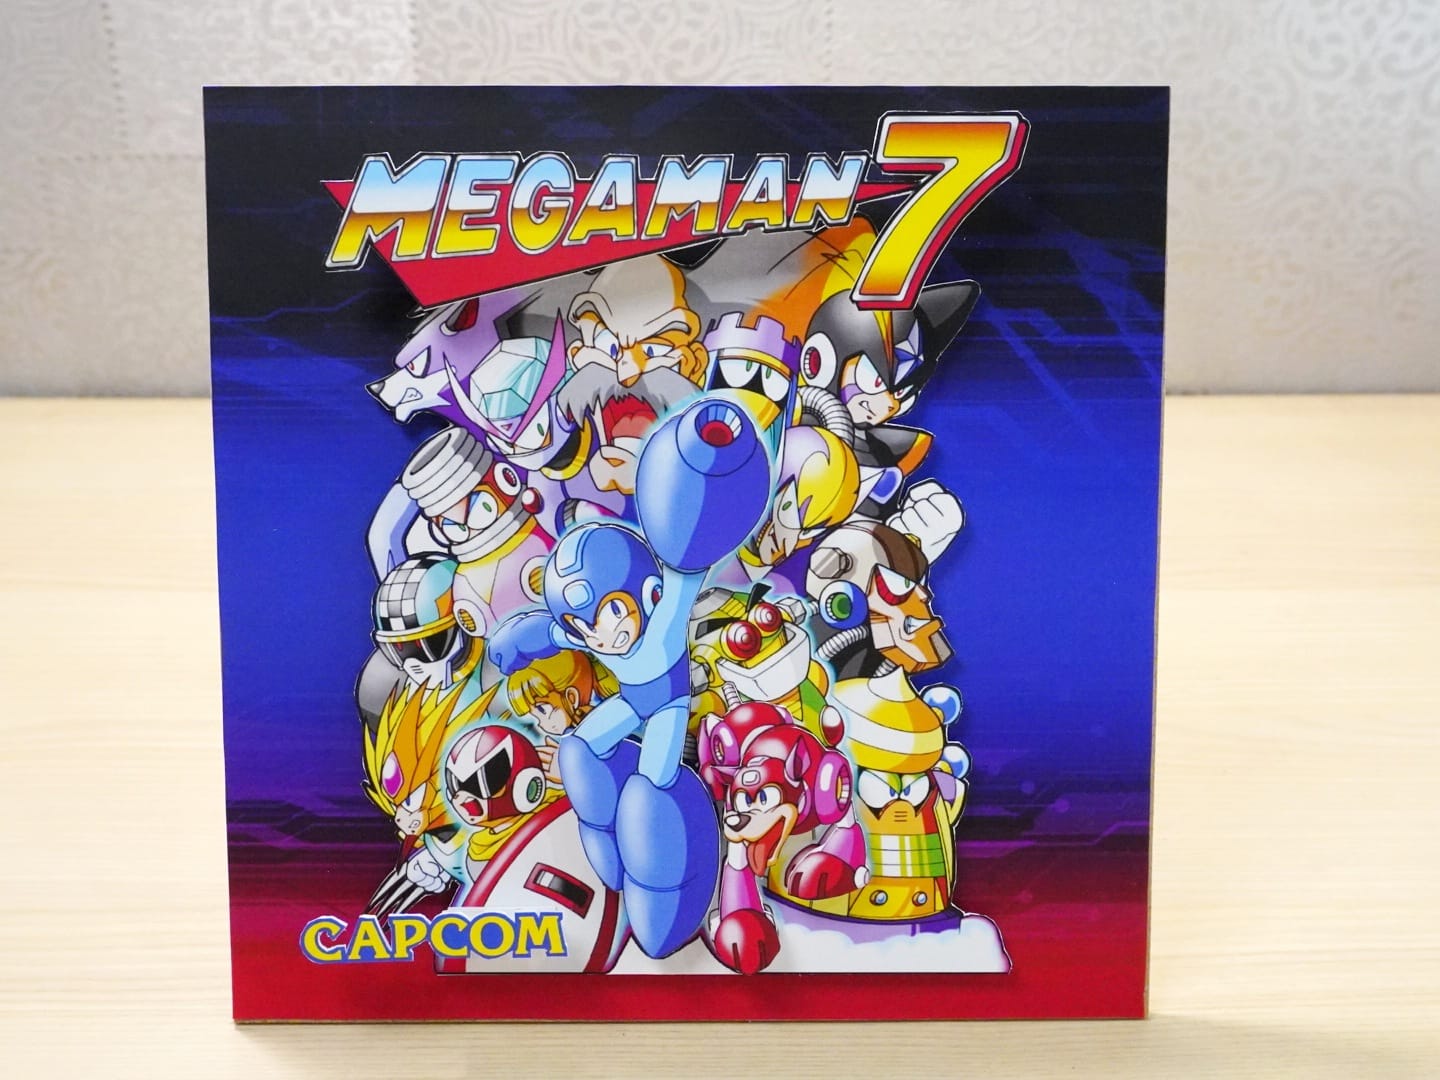 3D Retro Games Diorama Frame: Megaman / Rockman 7 - 20x20cm with MUSIC